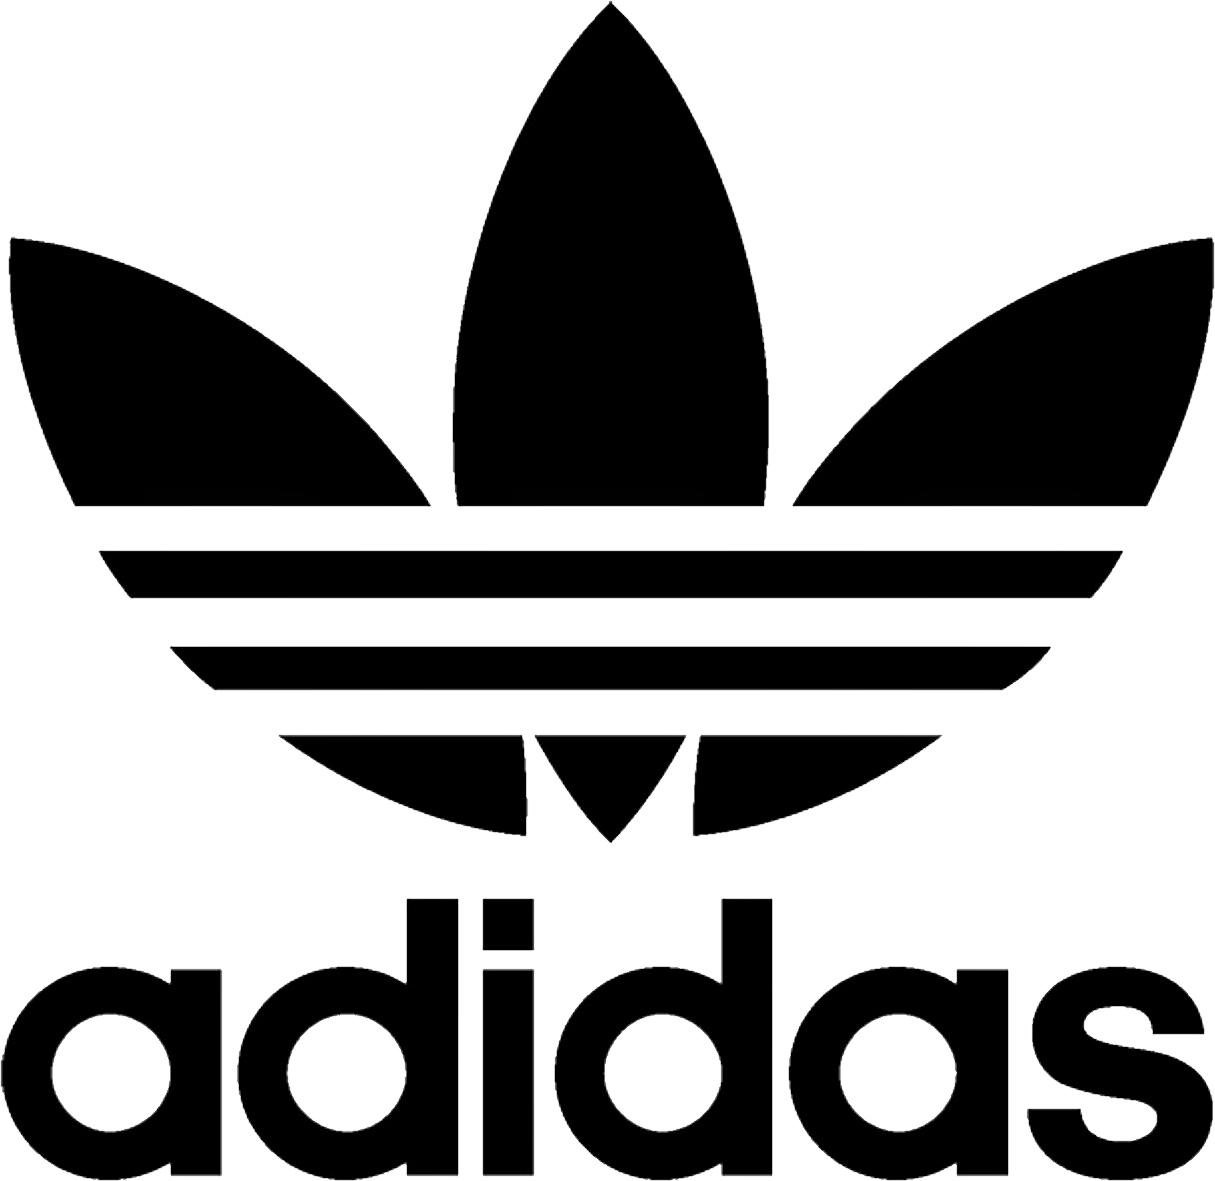 Adidas logo PNG. Adidas